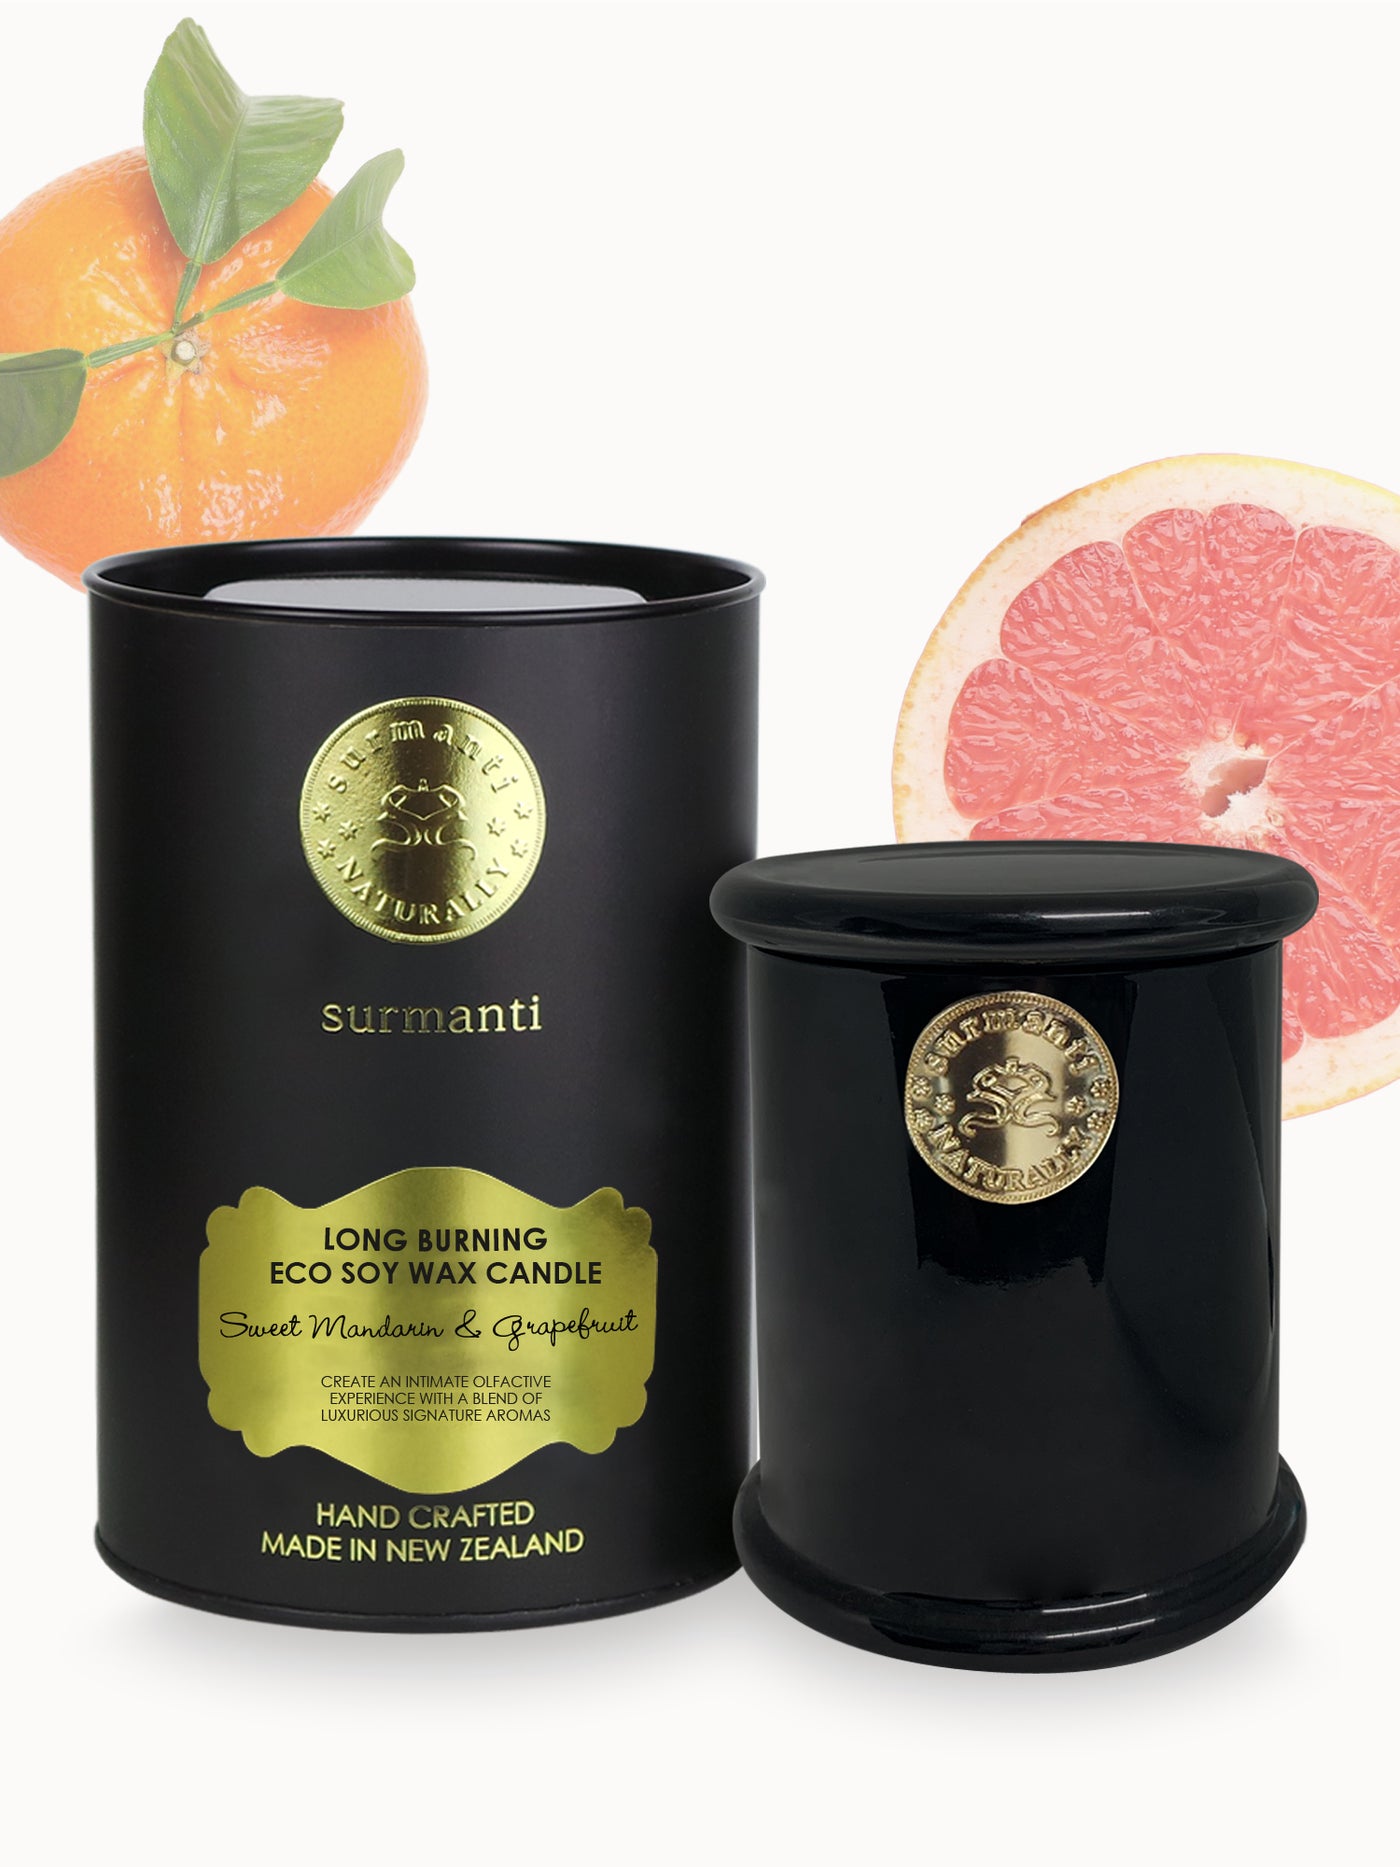 Sweet Mandarin & Grapefruit Eco Soy Wax Candle